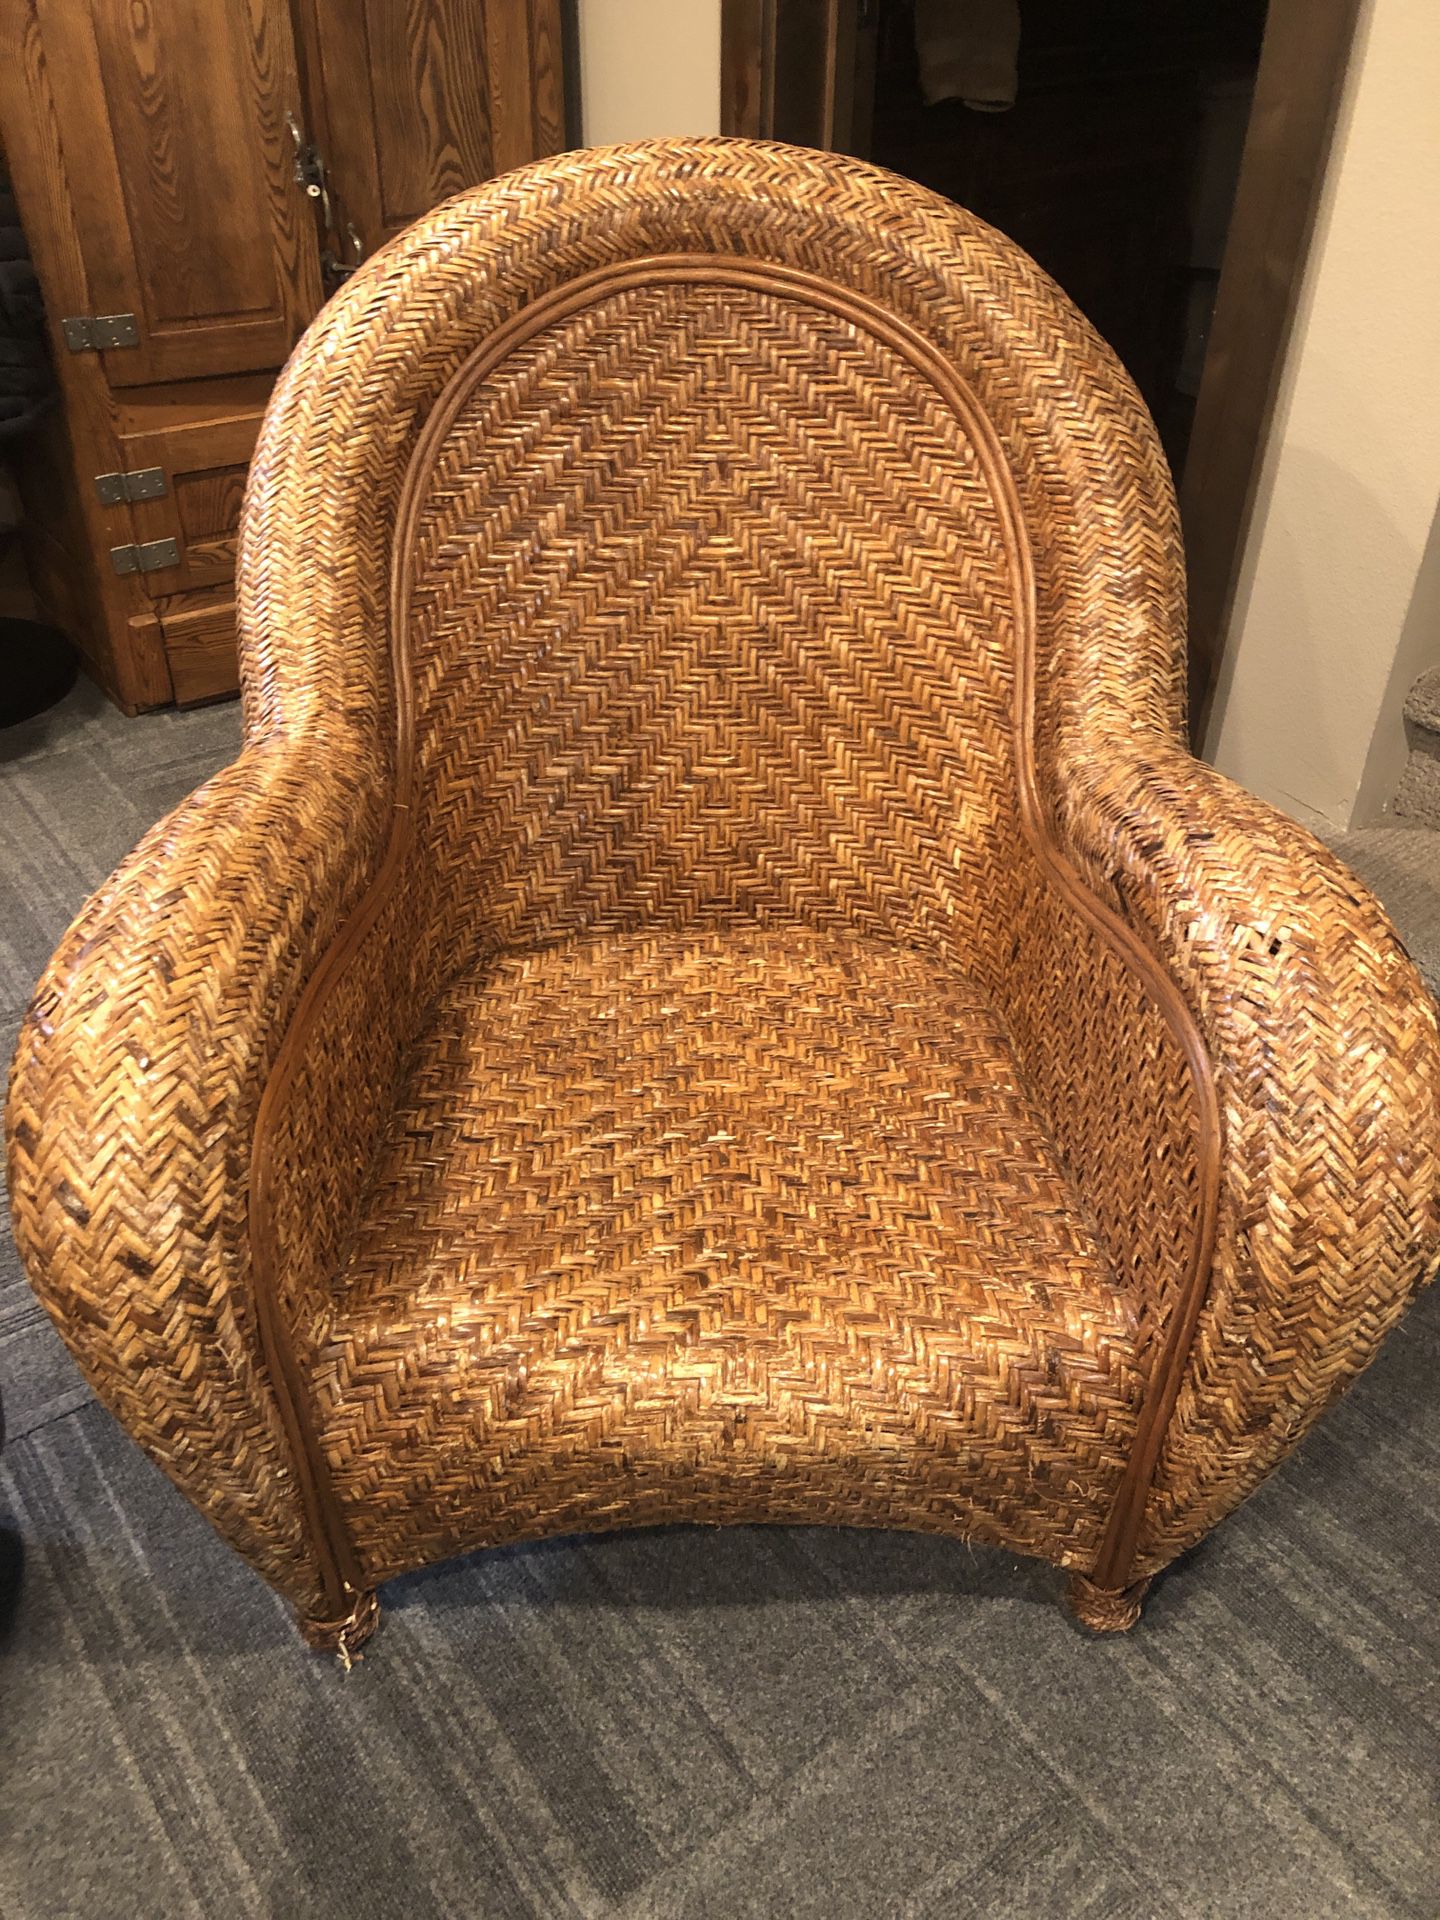 Pottery Barn Malabar Chair-used